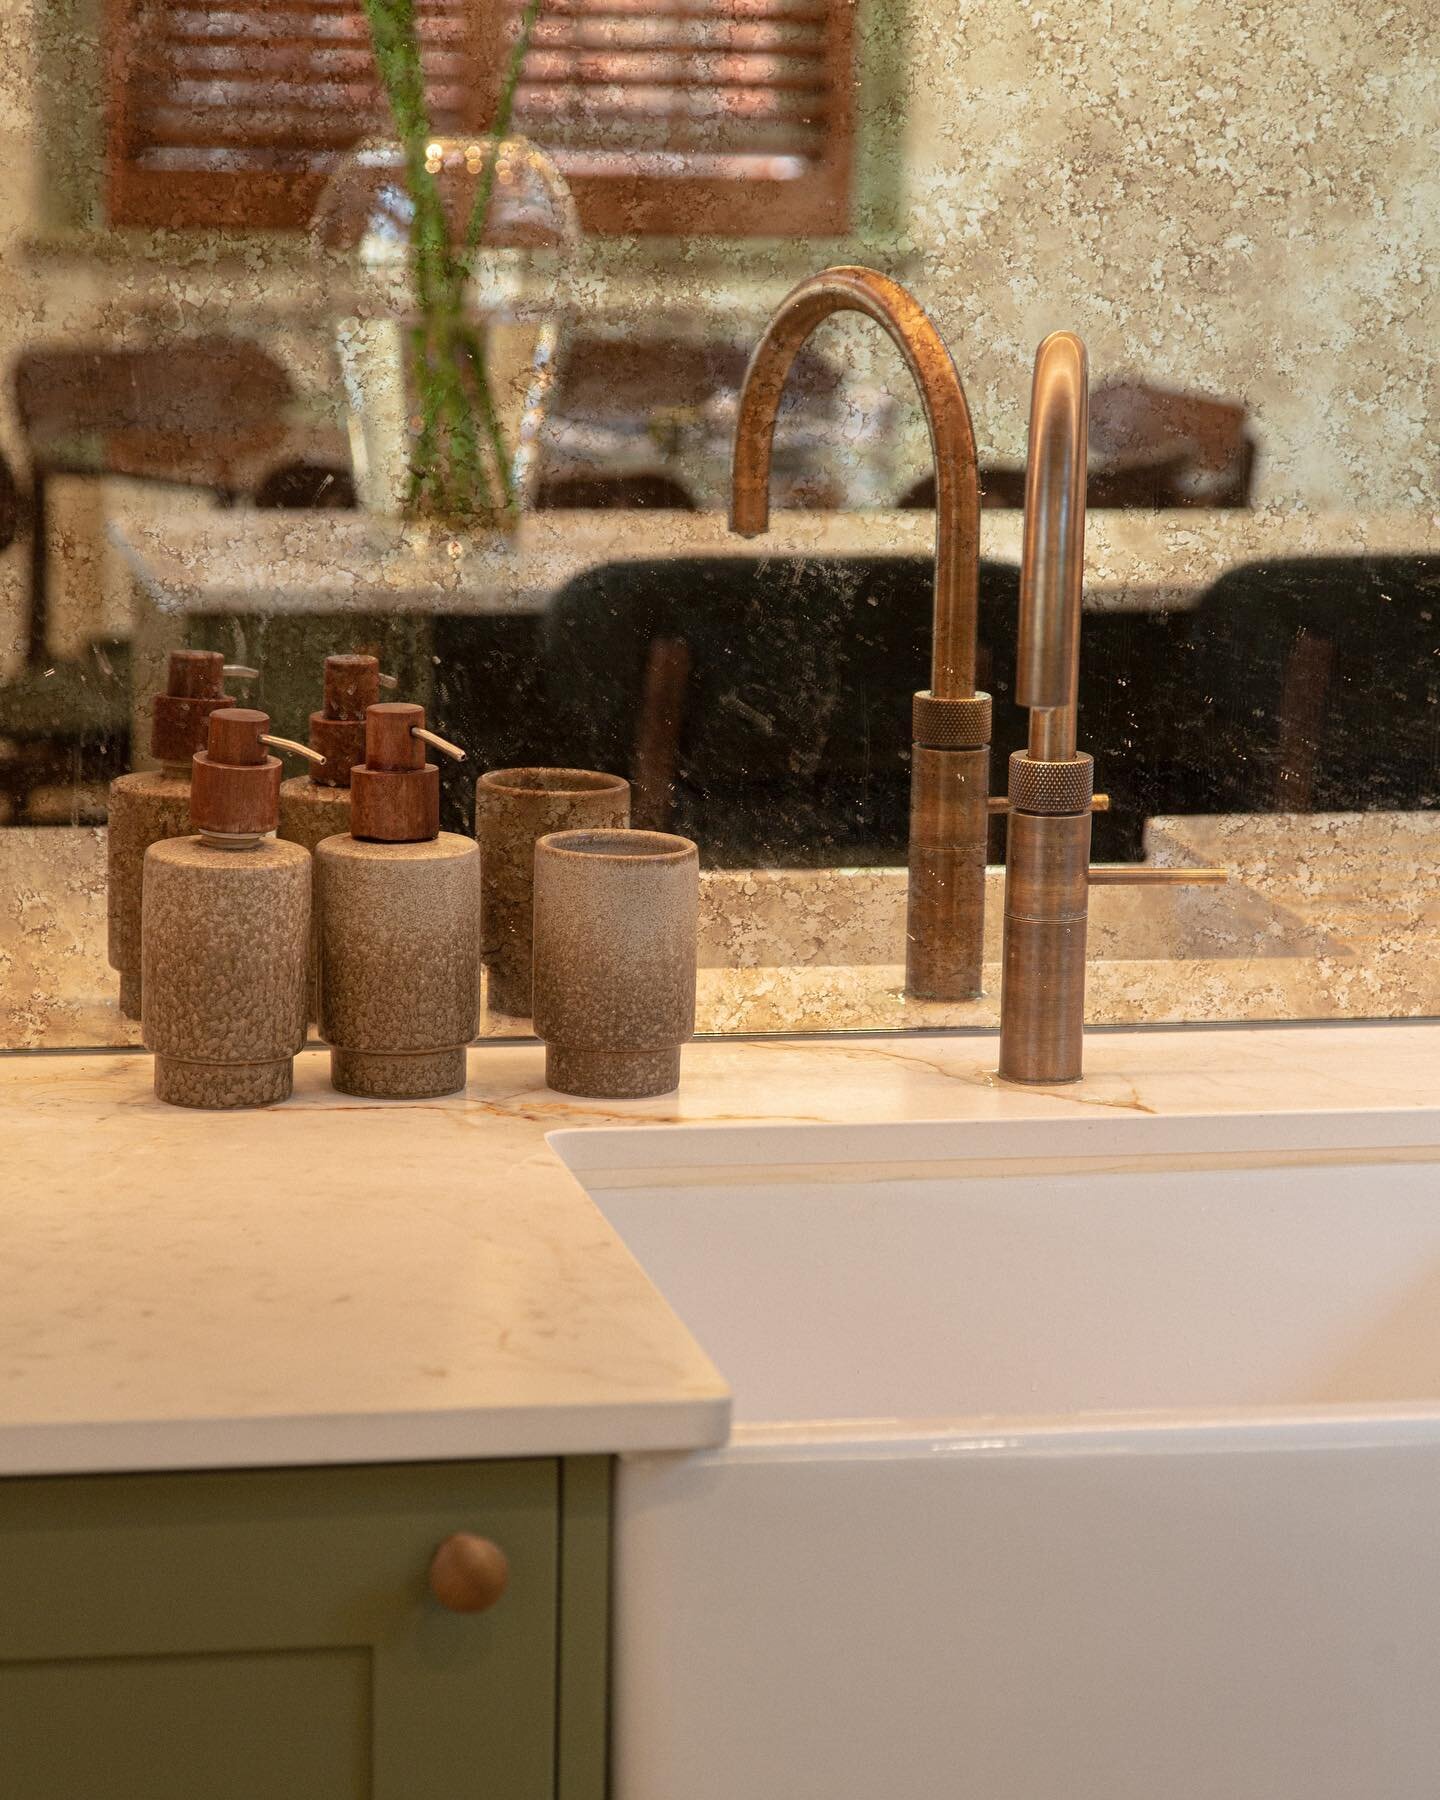 This bespoke mirrored splash back creates a very elegant finish to any kitchen

#kitchen #kitchendesign #interiordesign #home #homerenovation #kitcheninspo #kitchenrenovation #homeinspo